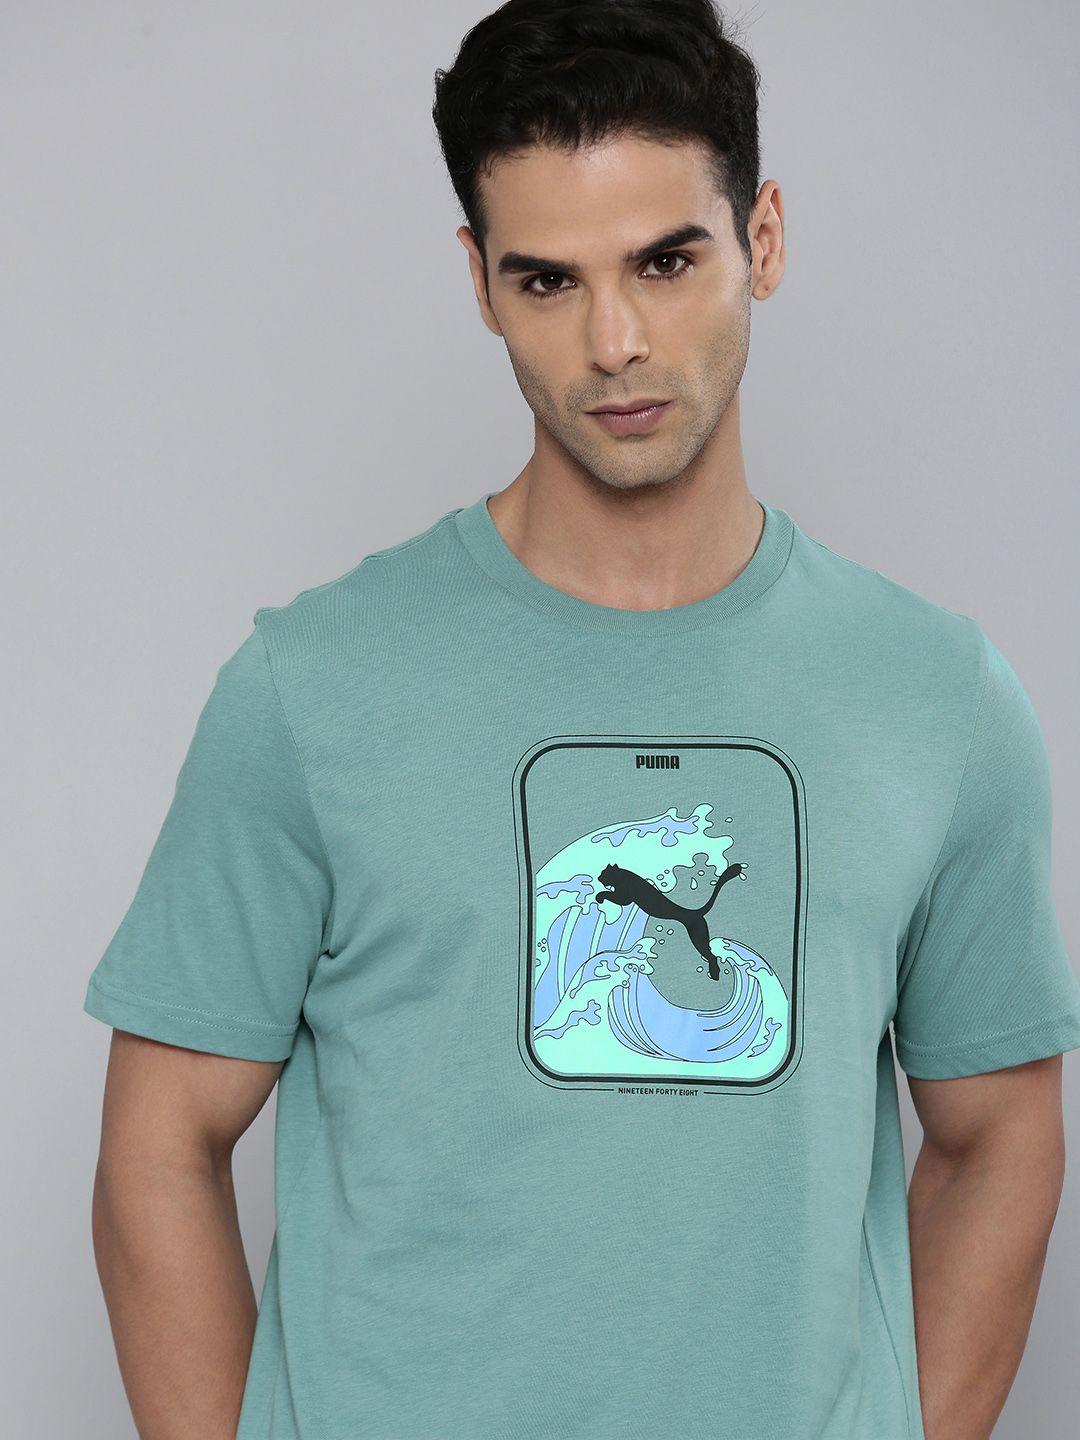 puma graphics wave brand logo printed pure cotton t-shirt